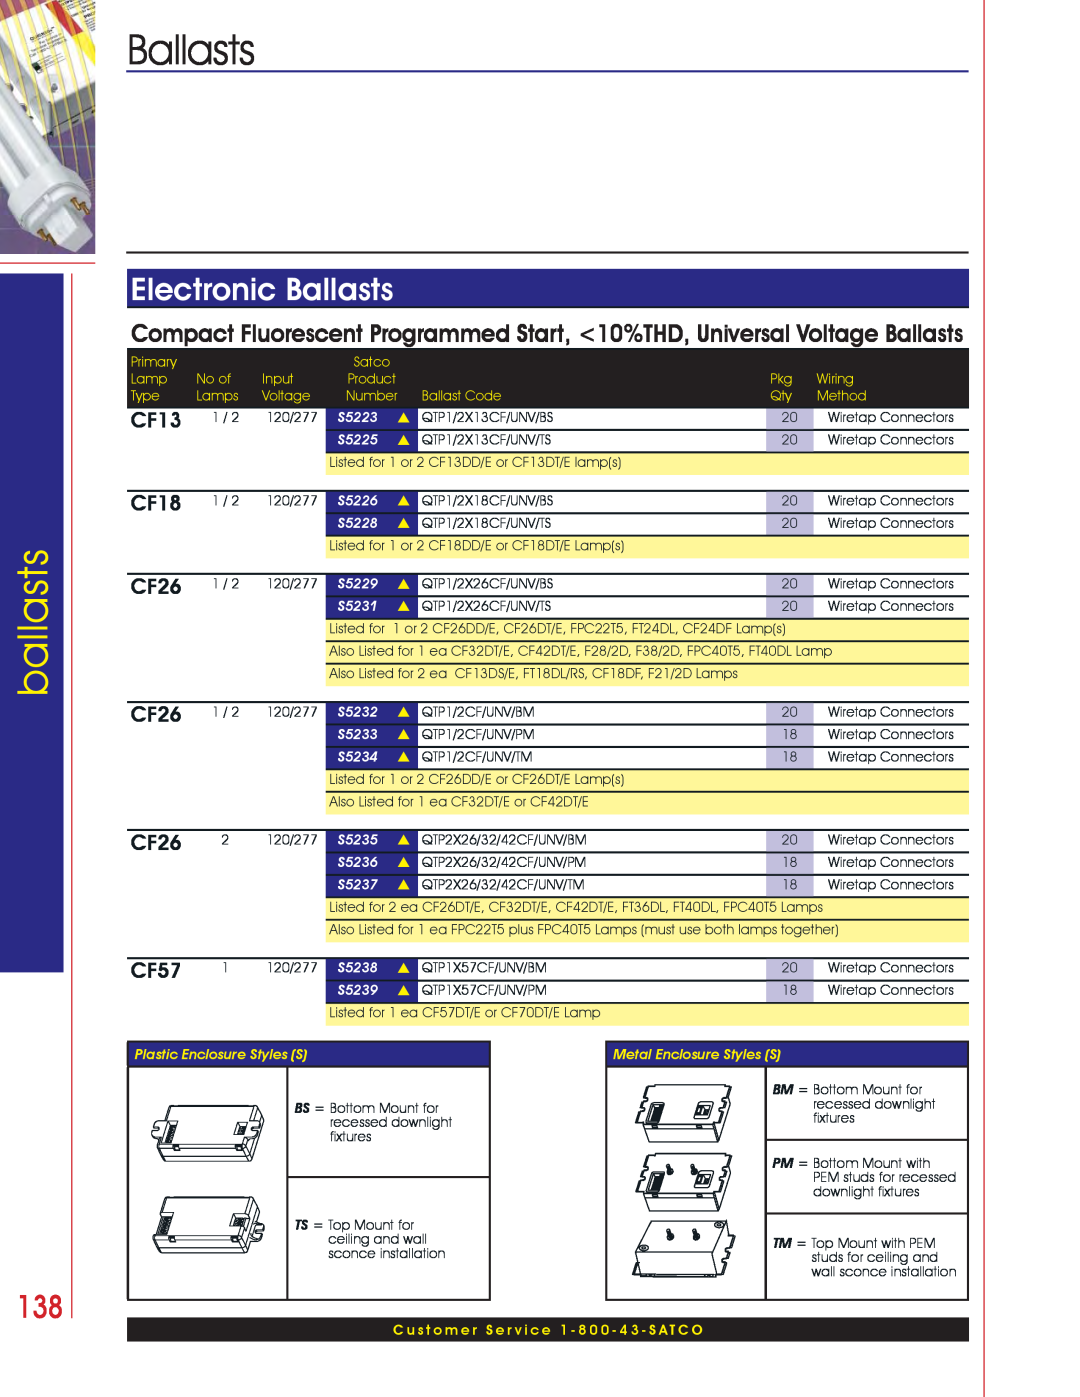 Satco Products Fluorescent Ballasts ballasts, Electronic Ballasts, CF13, CF18, CF26, CF57, S5223, S5225, S5228, S5231 